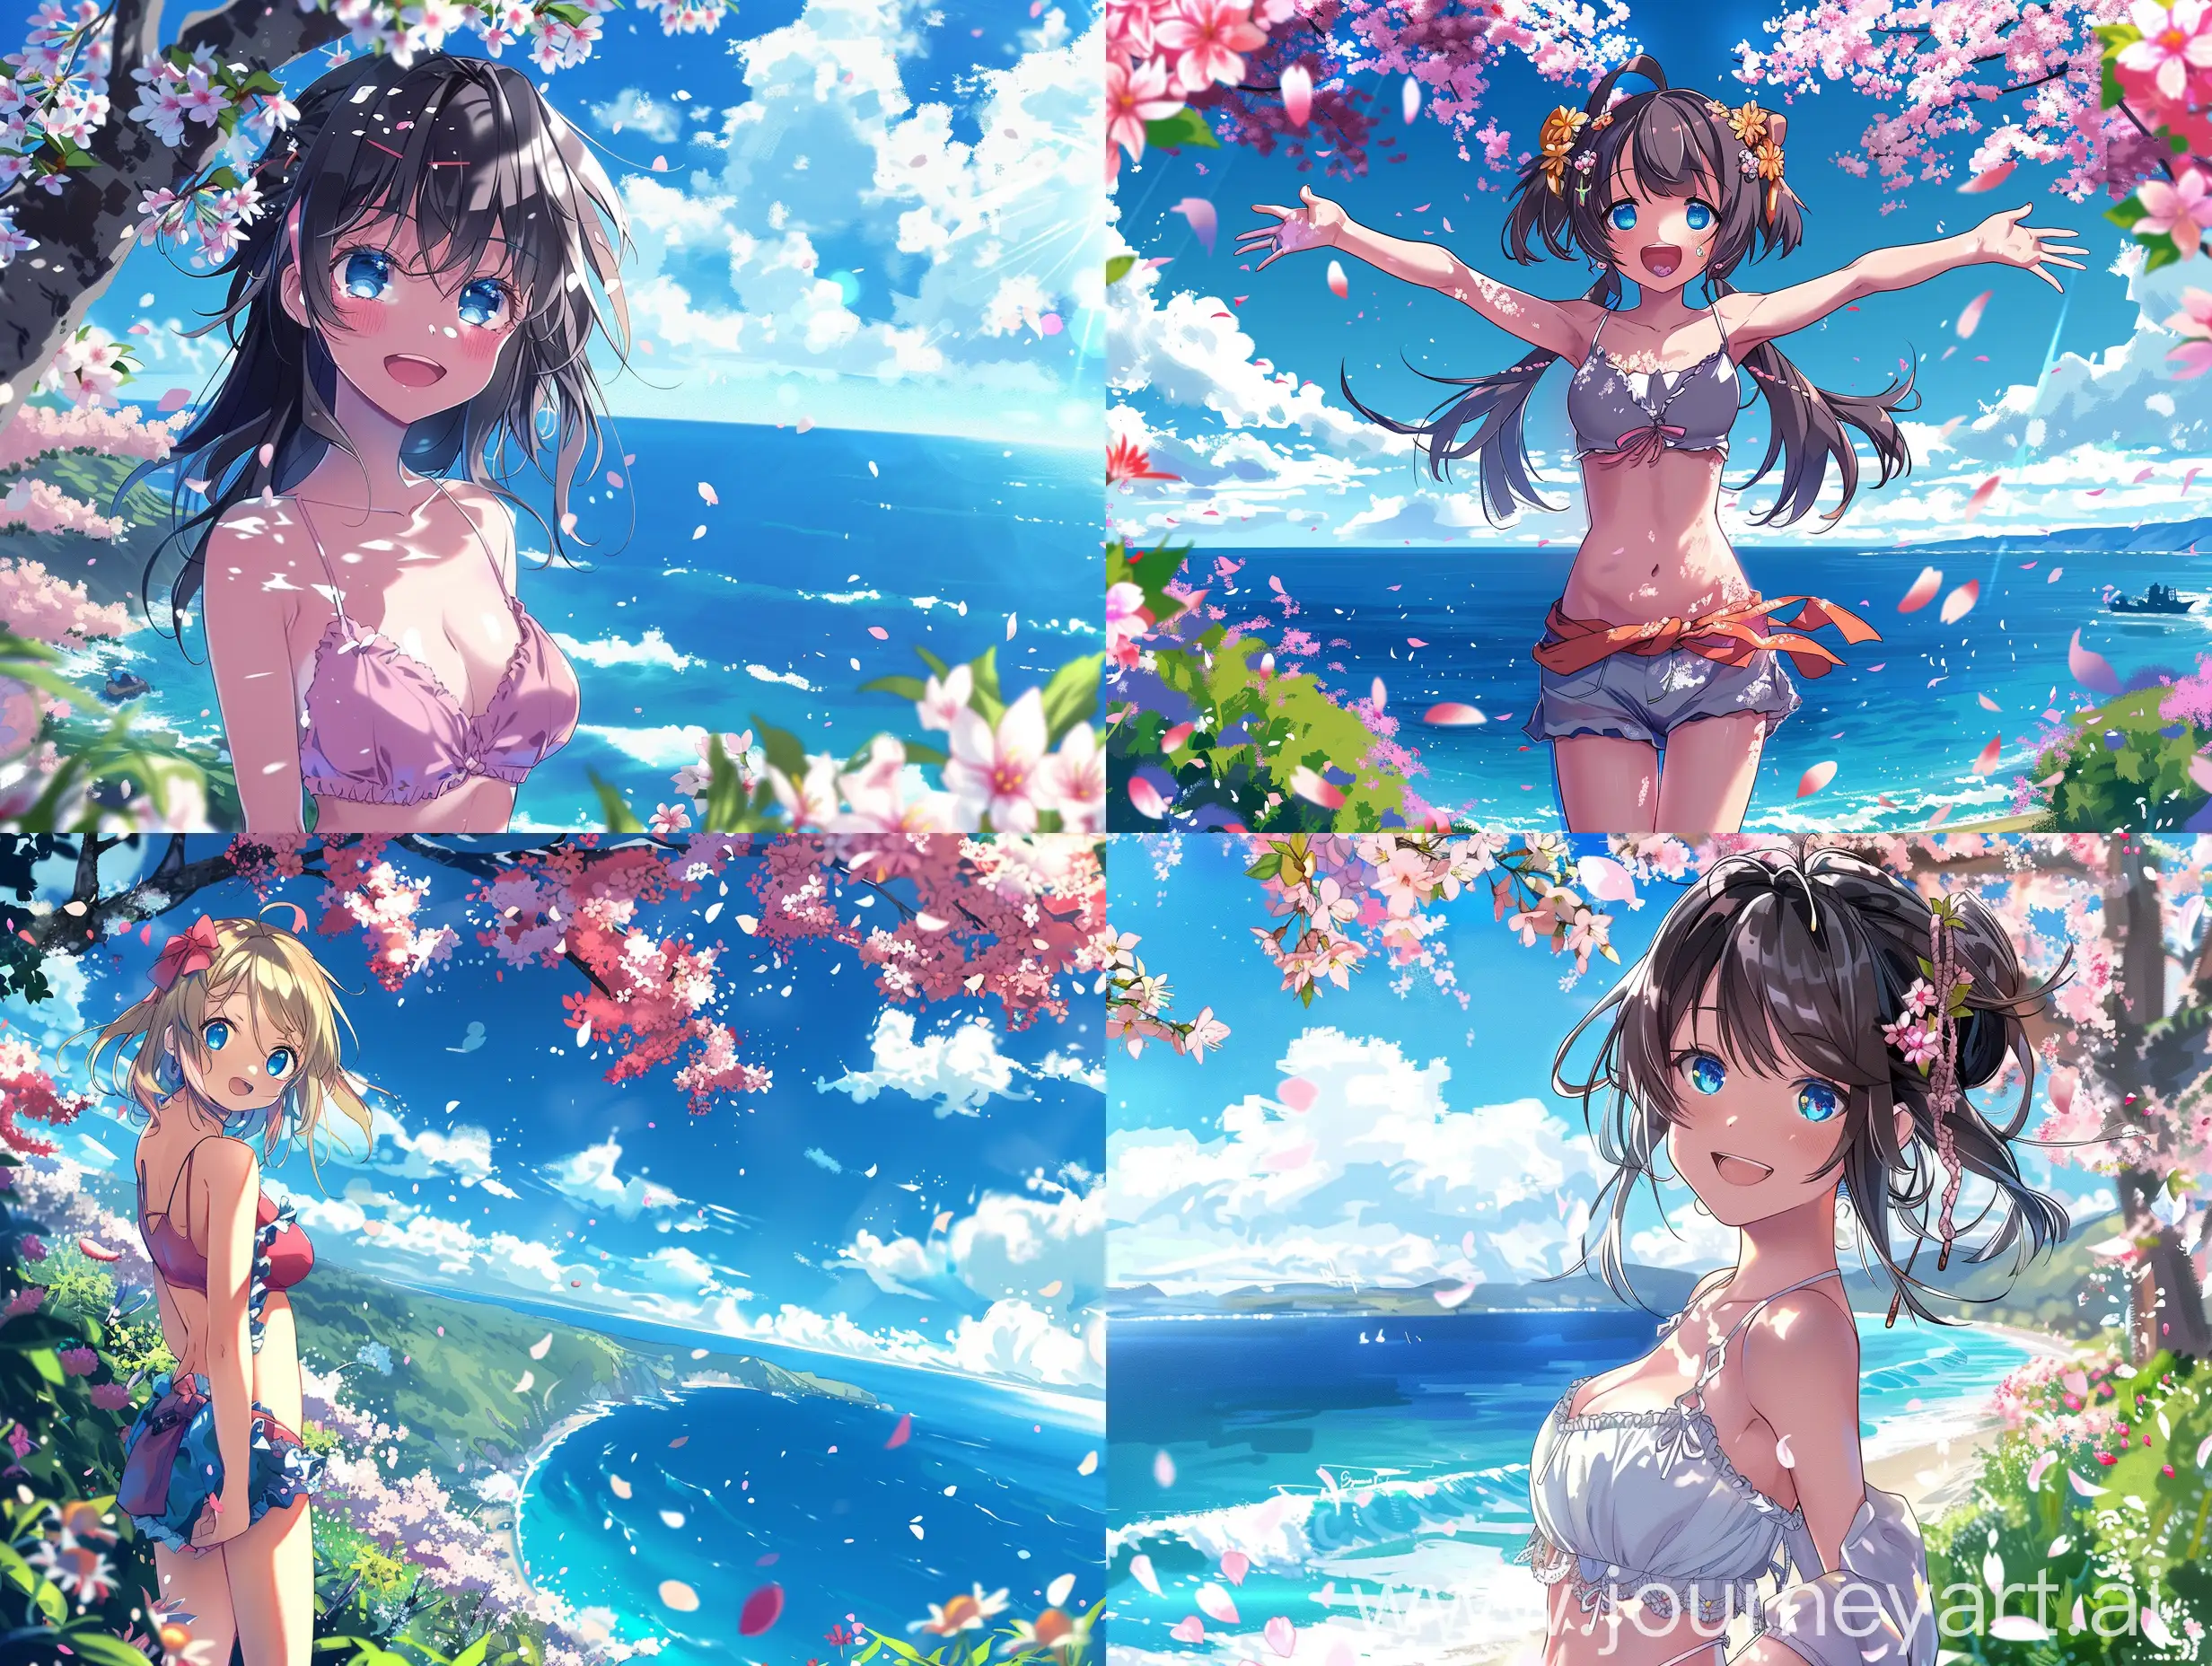 Solo-Anime-Girl-Enjoying-Summer-by-the-Seaside-with-Sakura-Trees